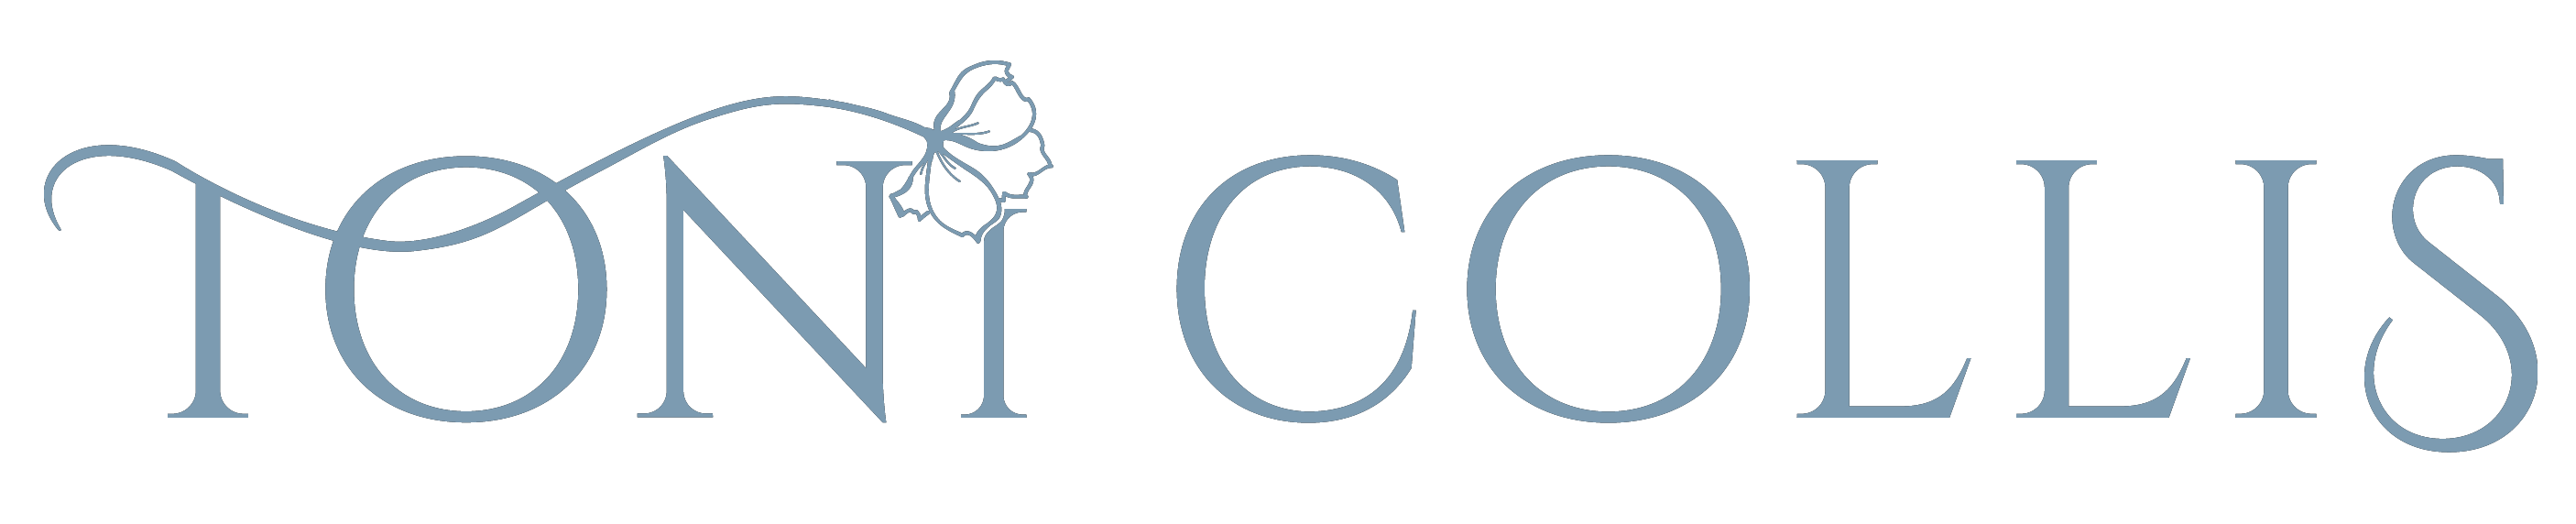 TC-logo-vertical-